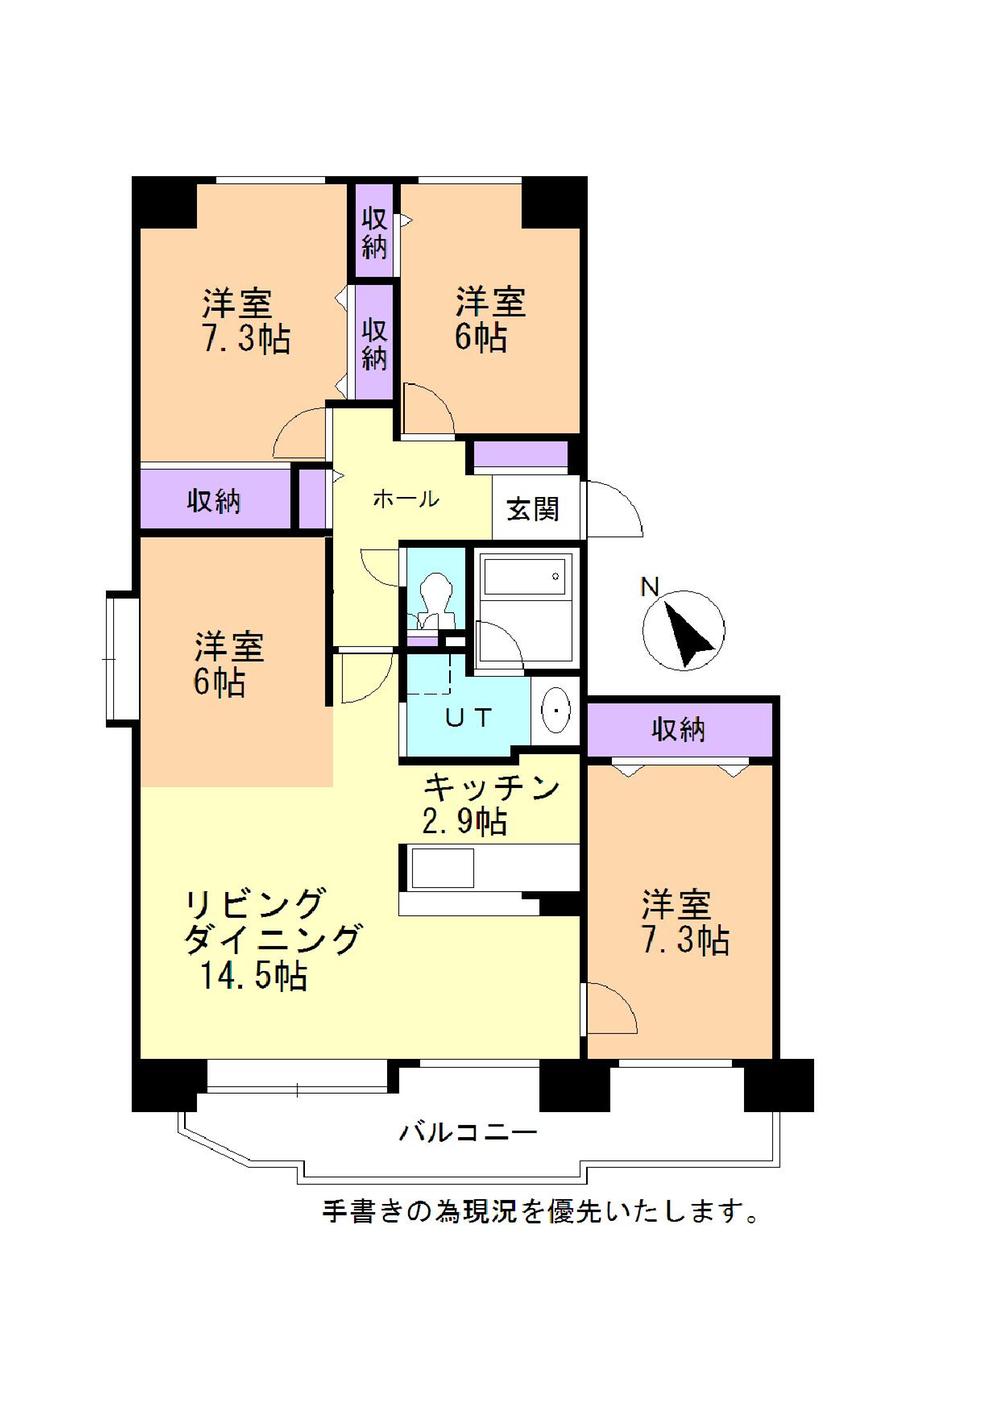 Floor plan. 3LDK, Price 13,900,000 yen, Occupied area 92.92 sq m , Balcony area 11.27 sq m